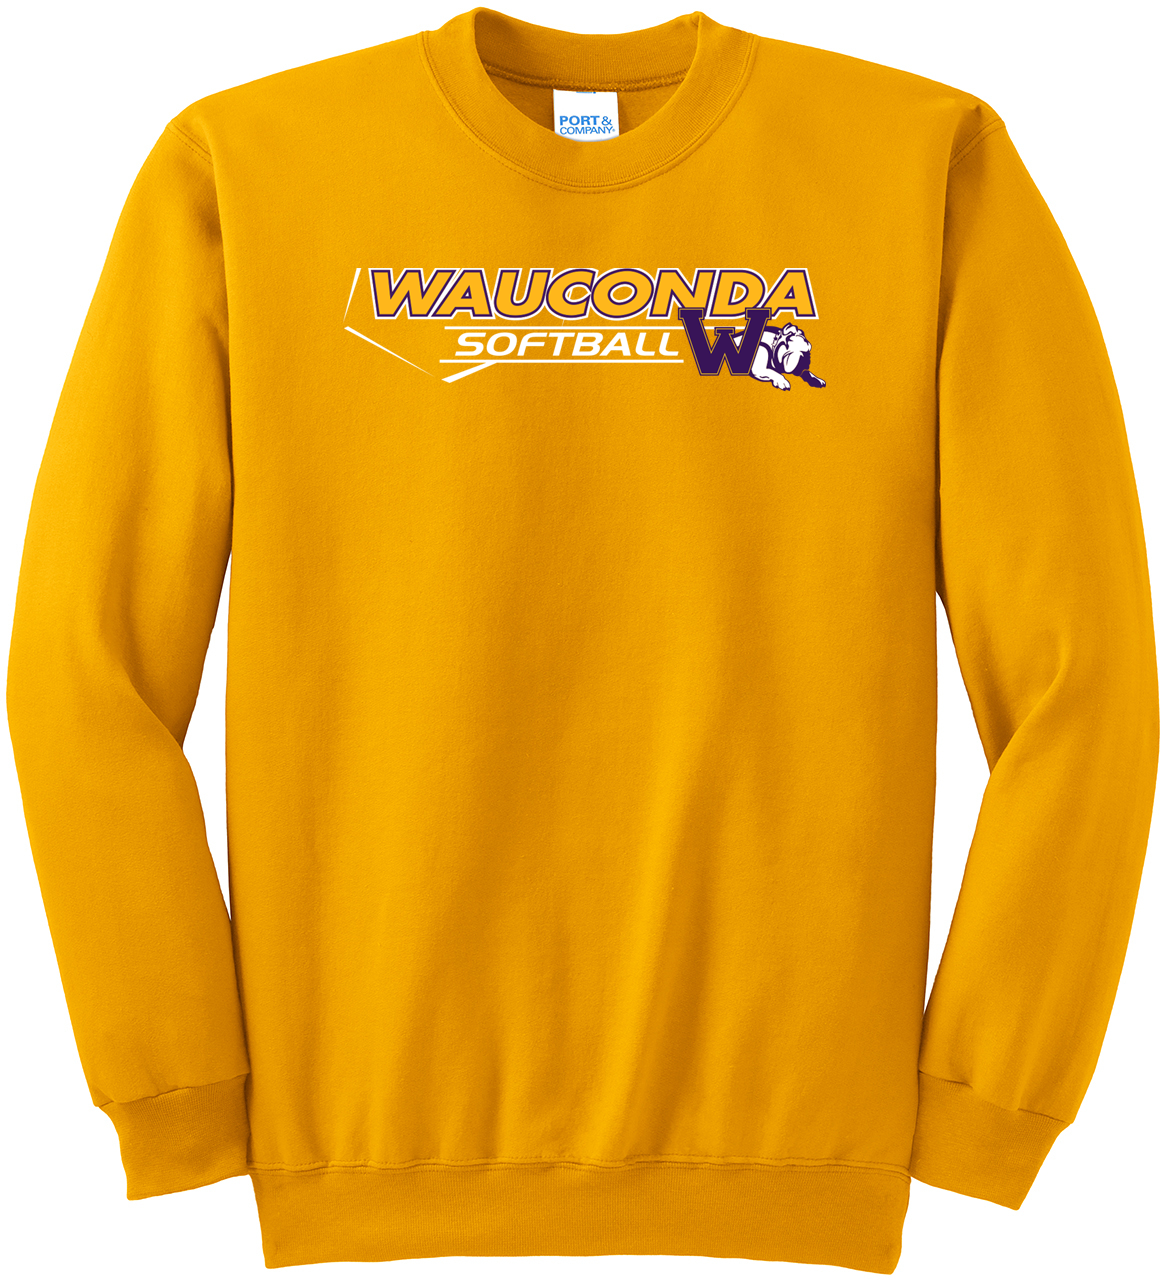 Wauconda Softball Crew Neck Sweater